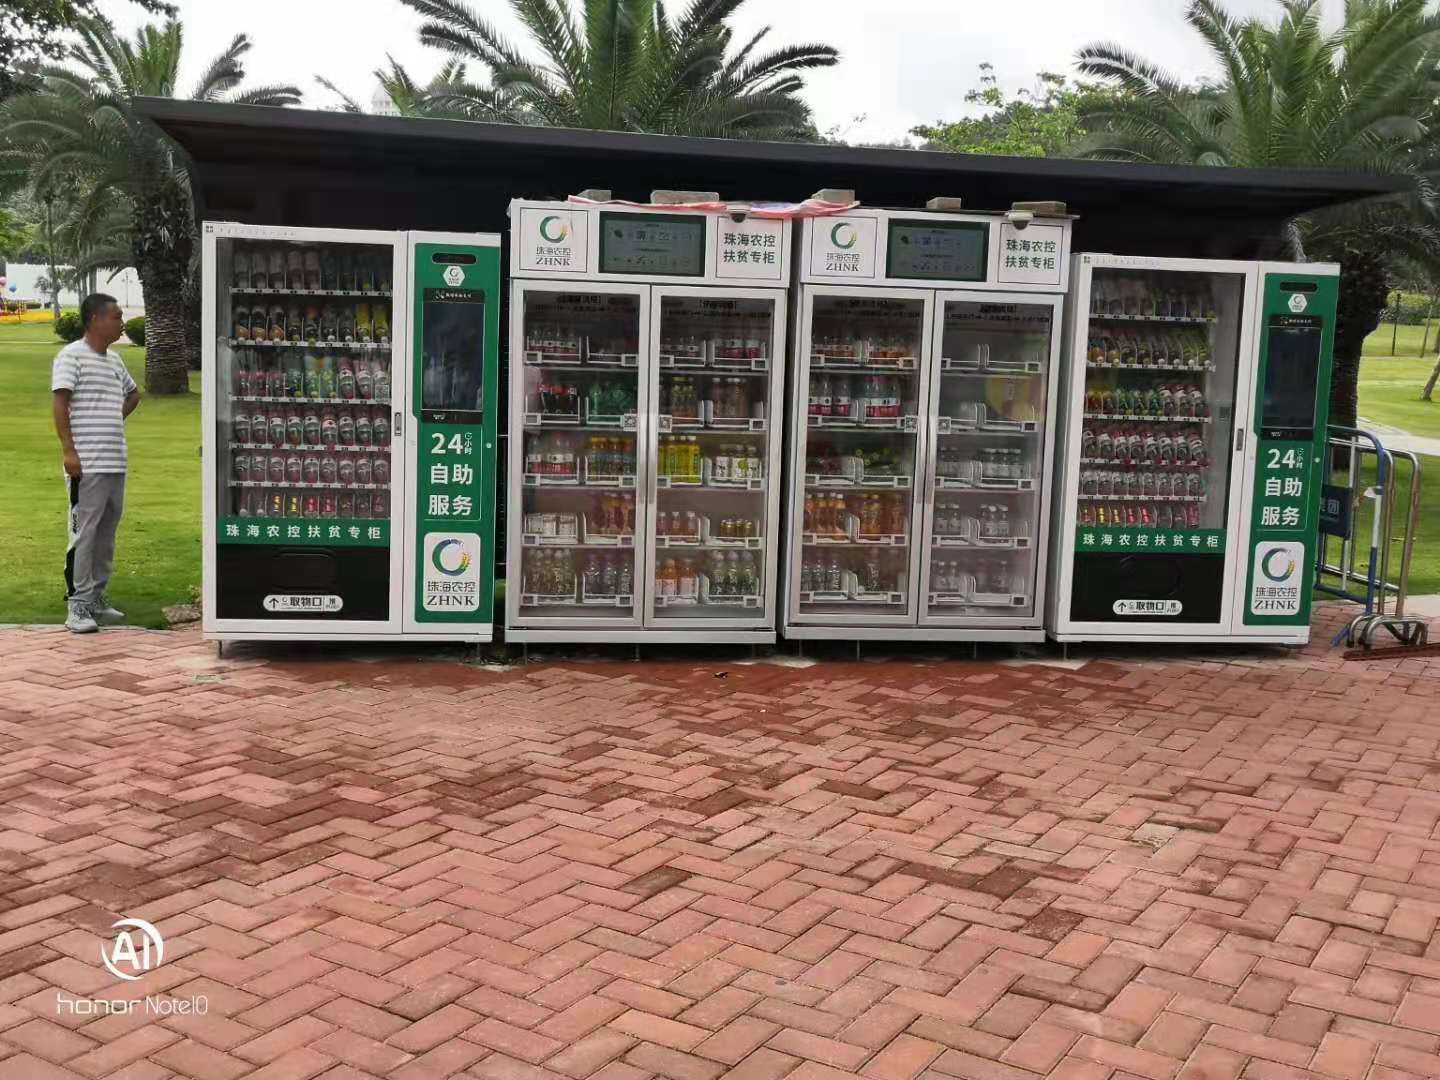 Micron smart vending cabinet